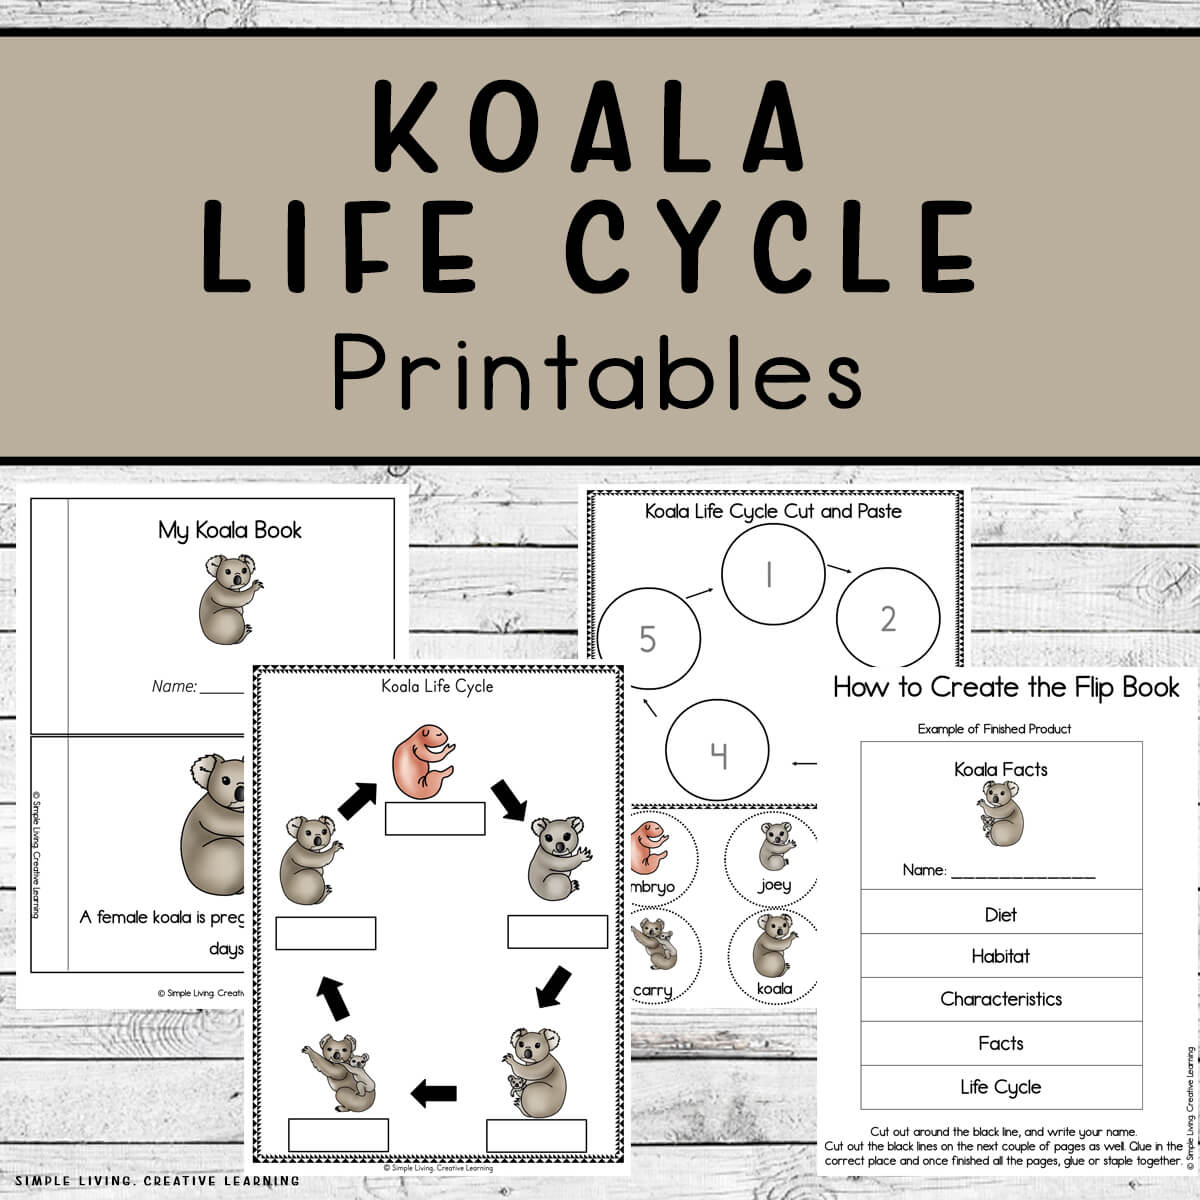 Koala Life Cycle Printables four pages